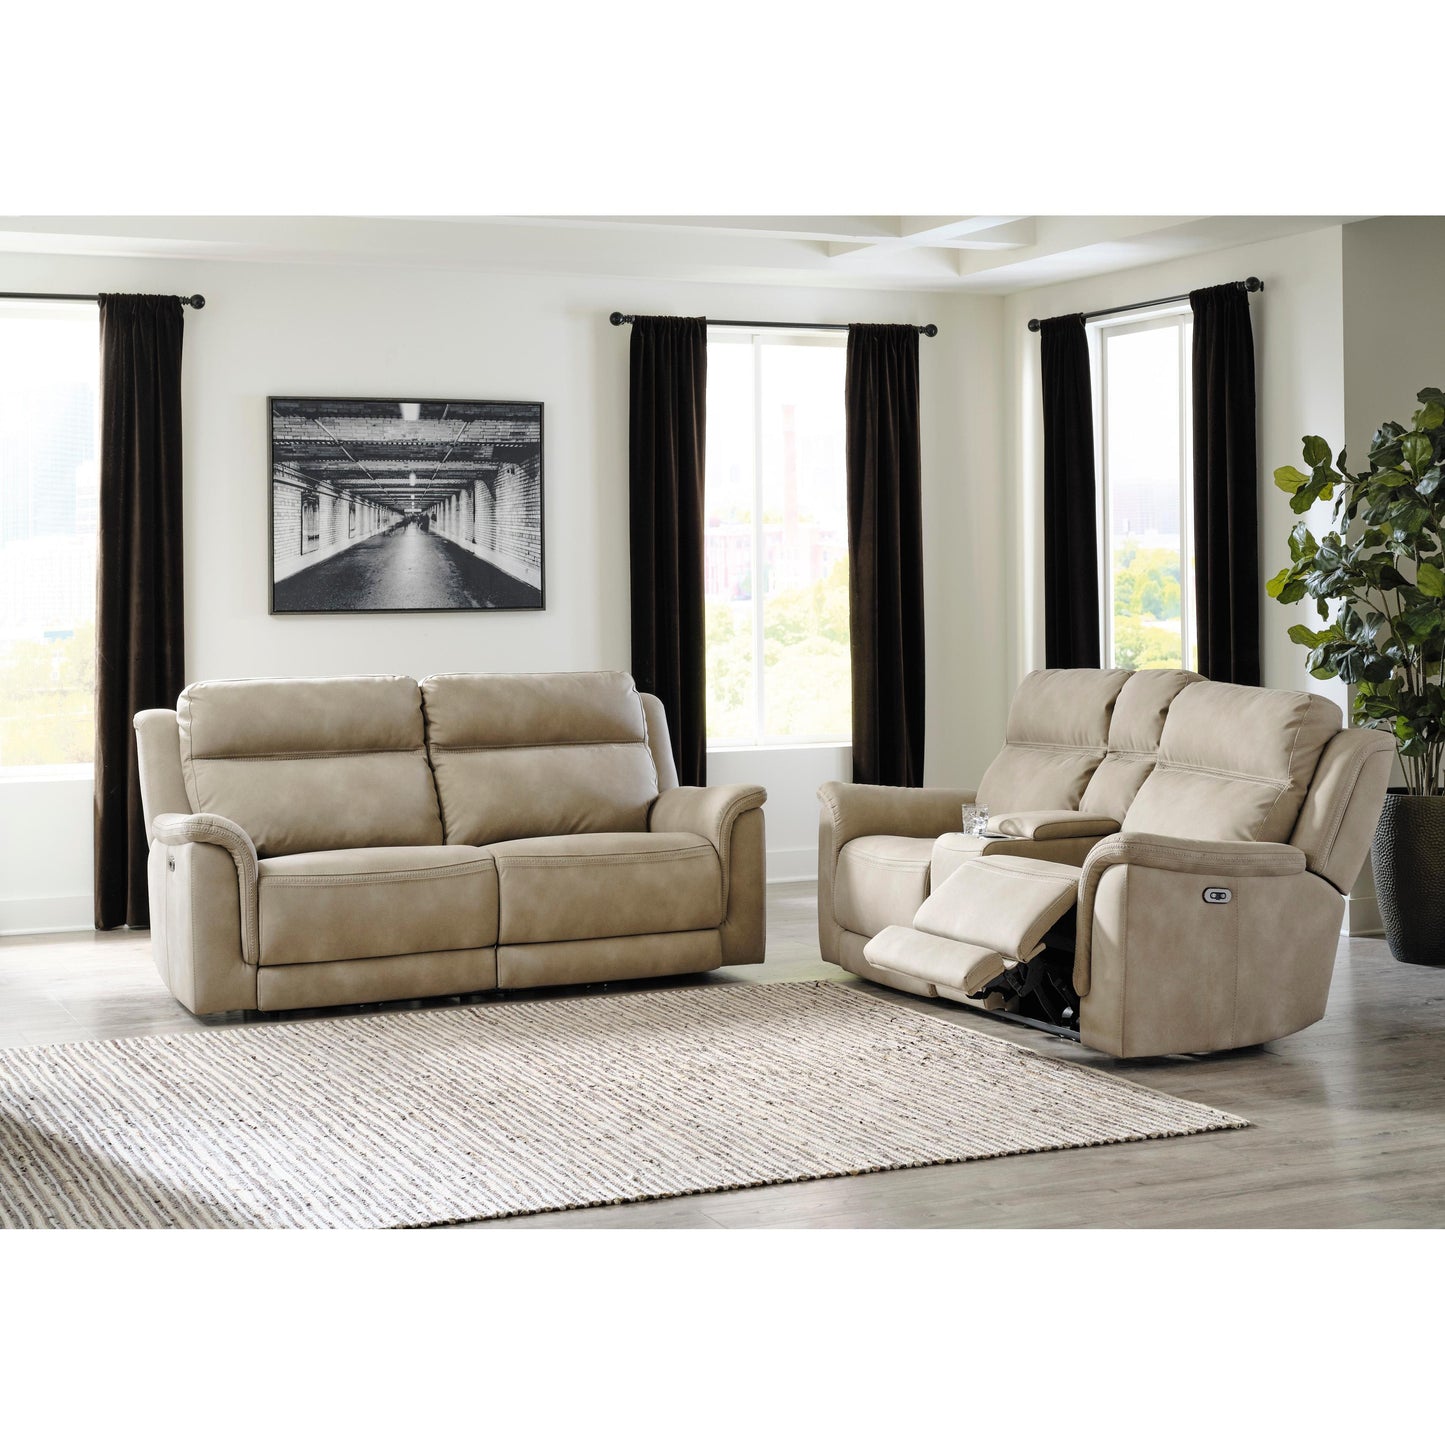 Signature Design by Ashley Next-Gen Durapella 59302 2 pc Power Reclining Living Room Set IMAGE 2